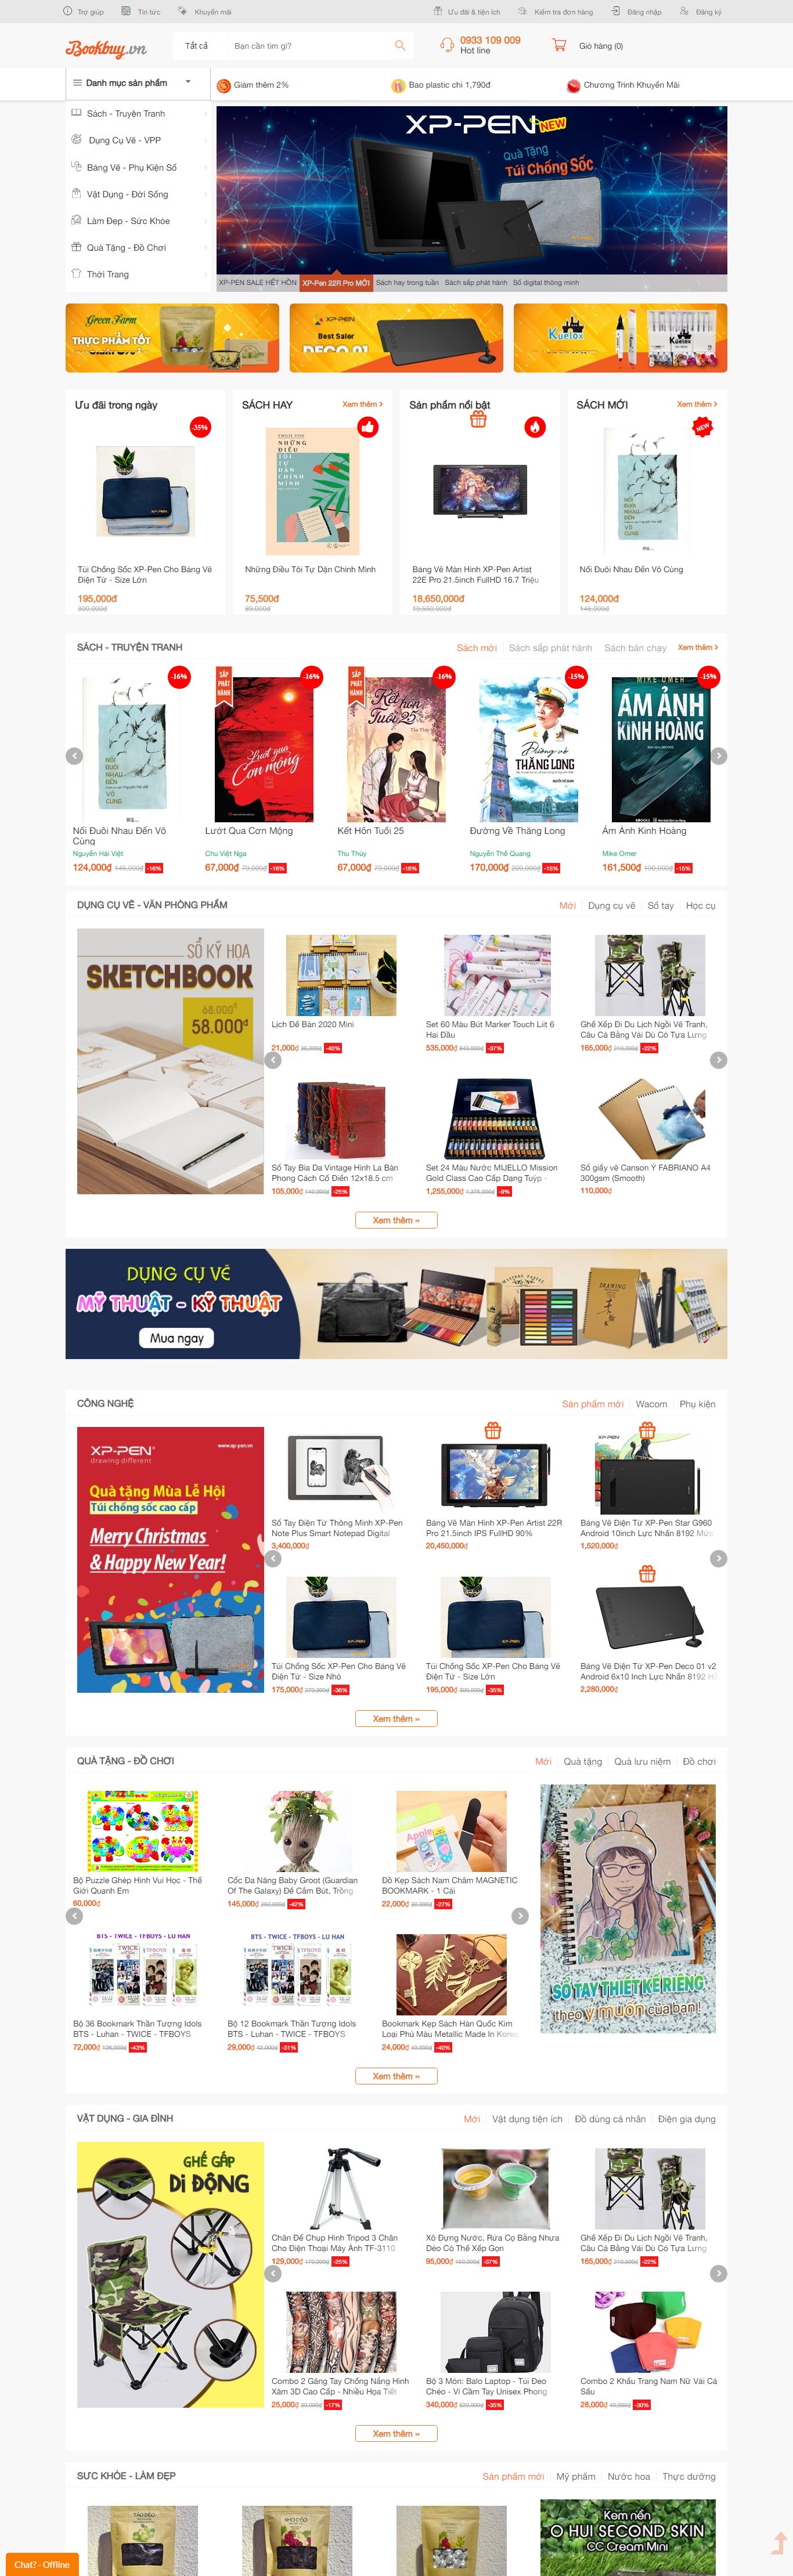 Thiết kế Website bán sách - bookbuy.vn